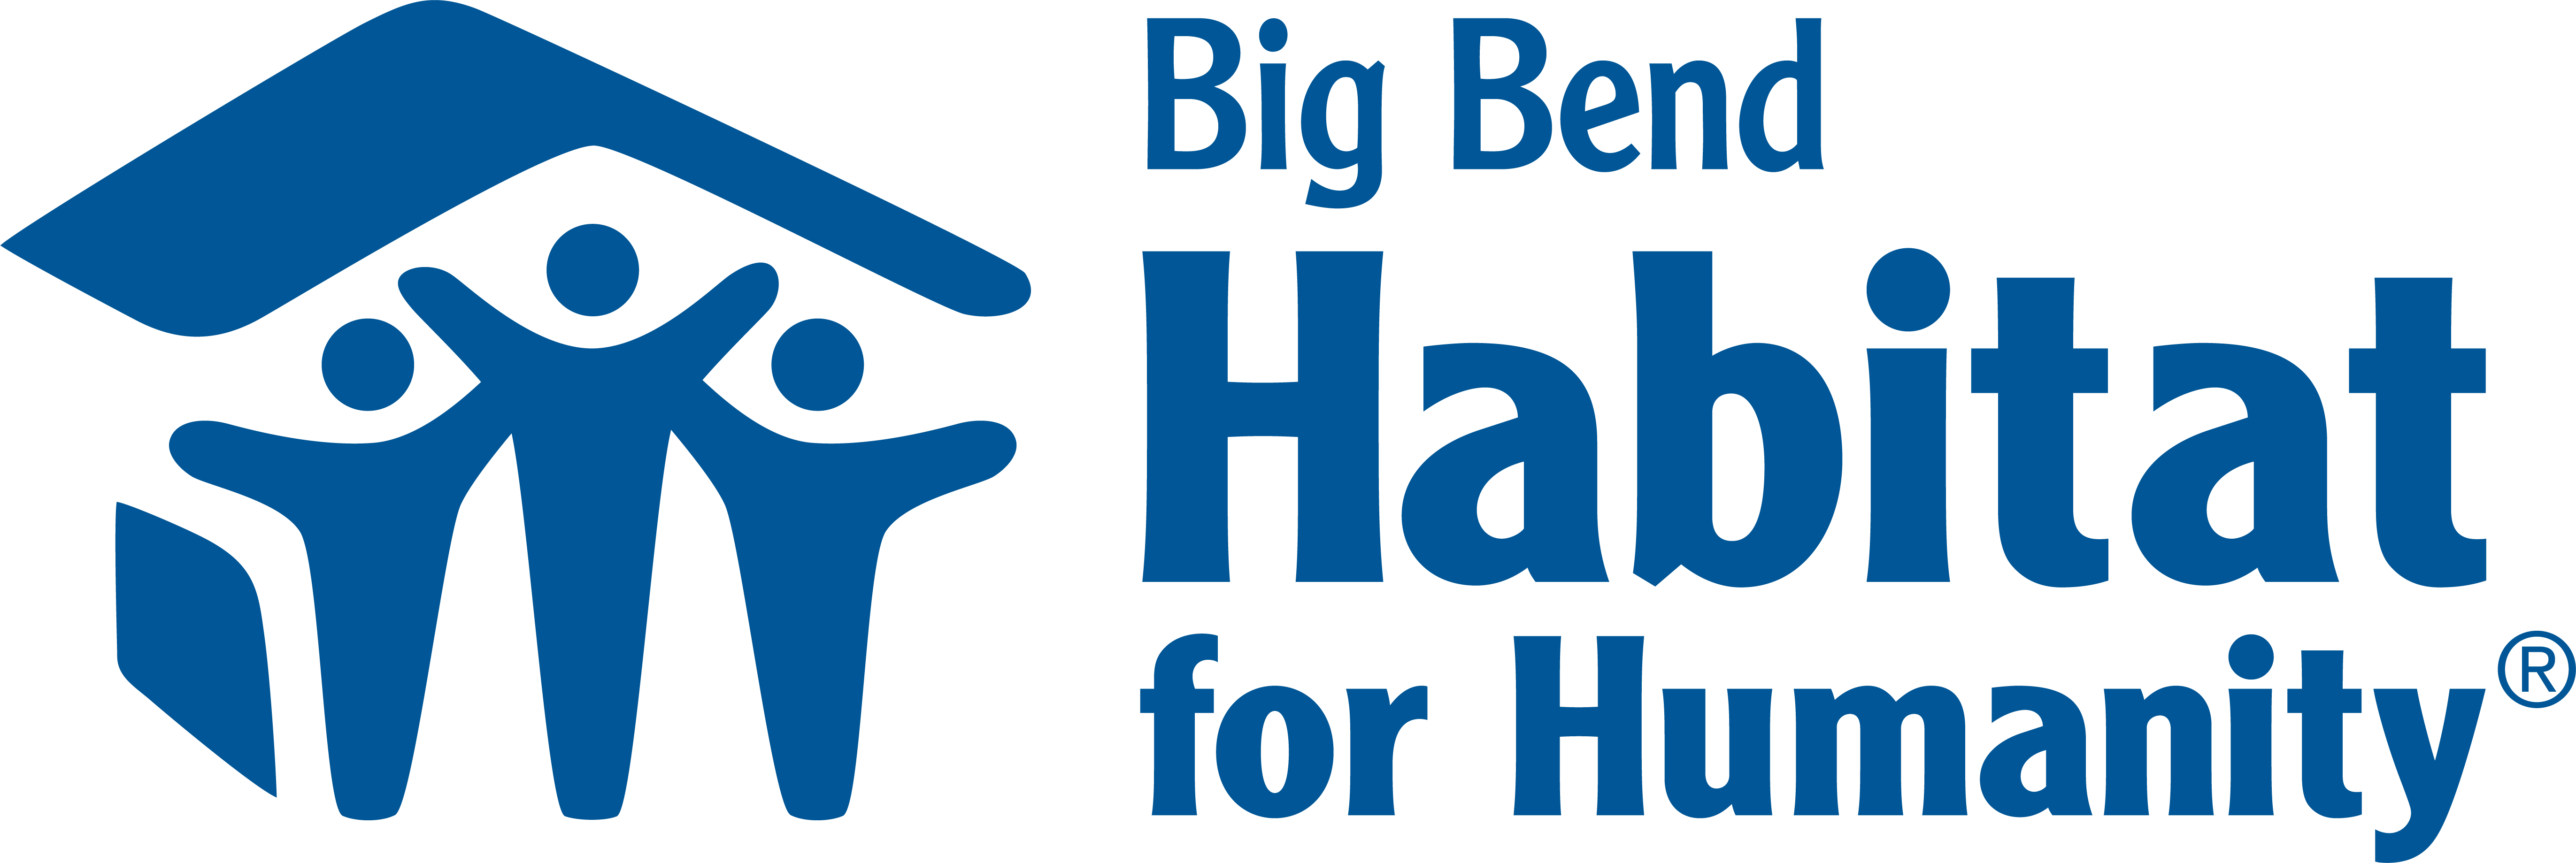 Big Bend Habitat for Humanity logo